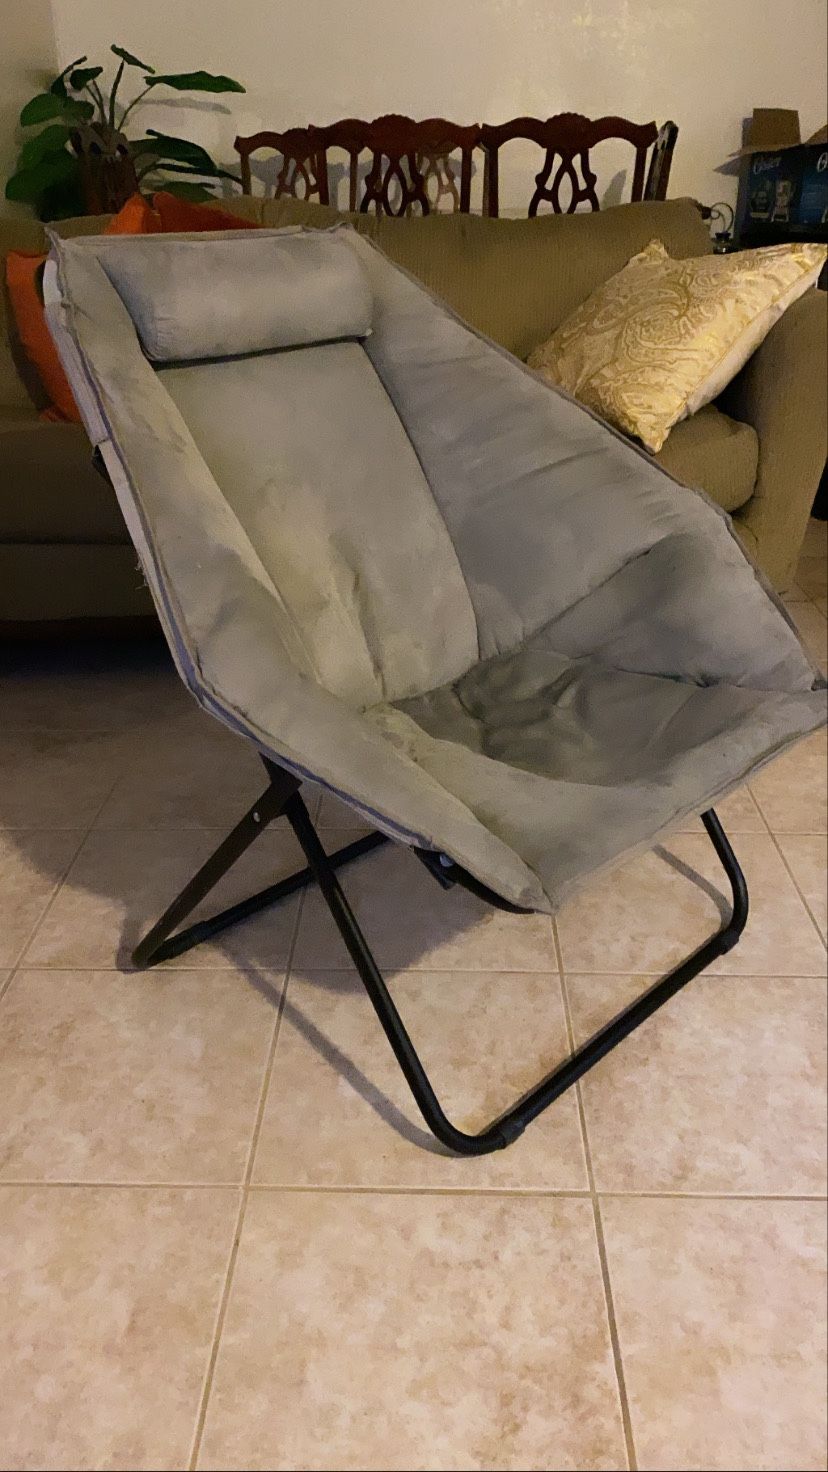 Comfortable grey chair